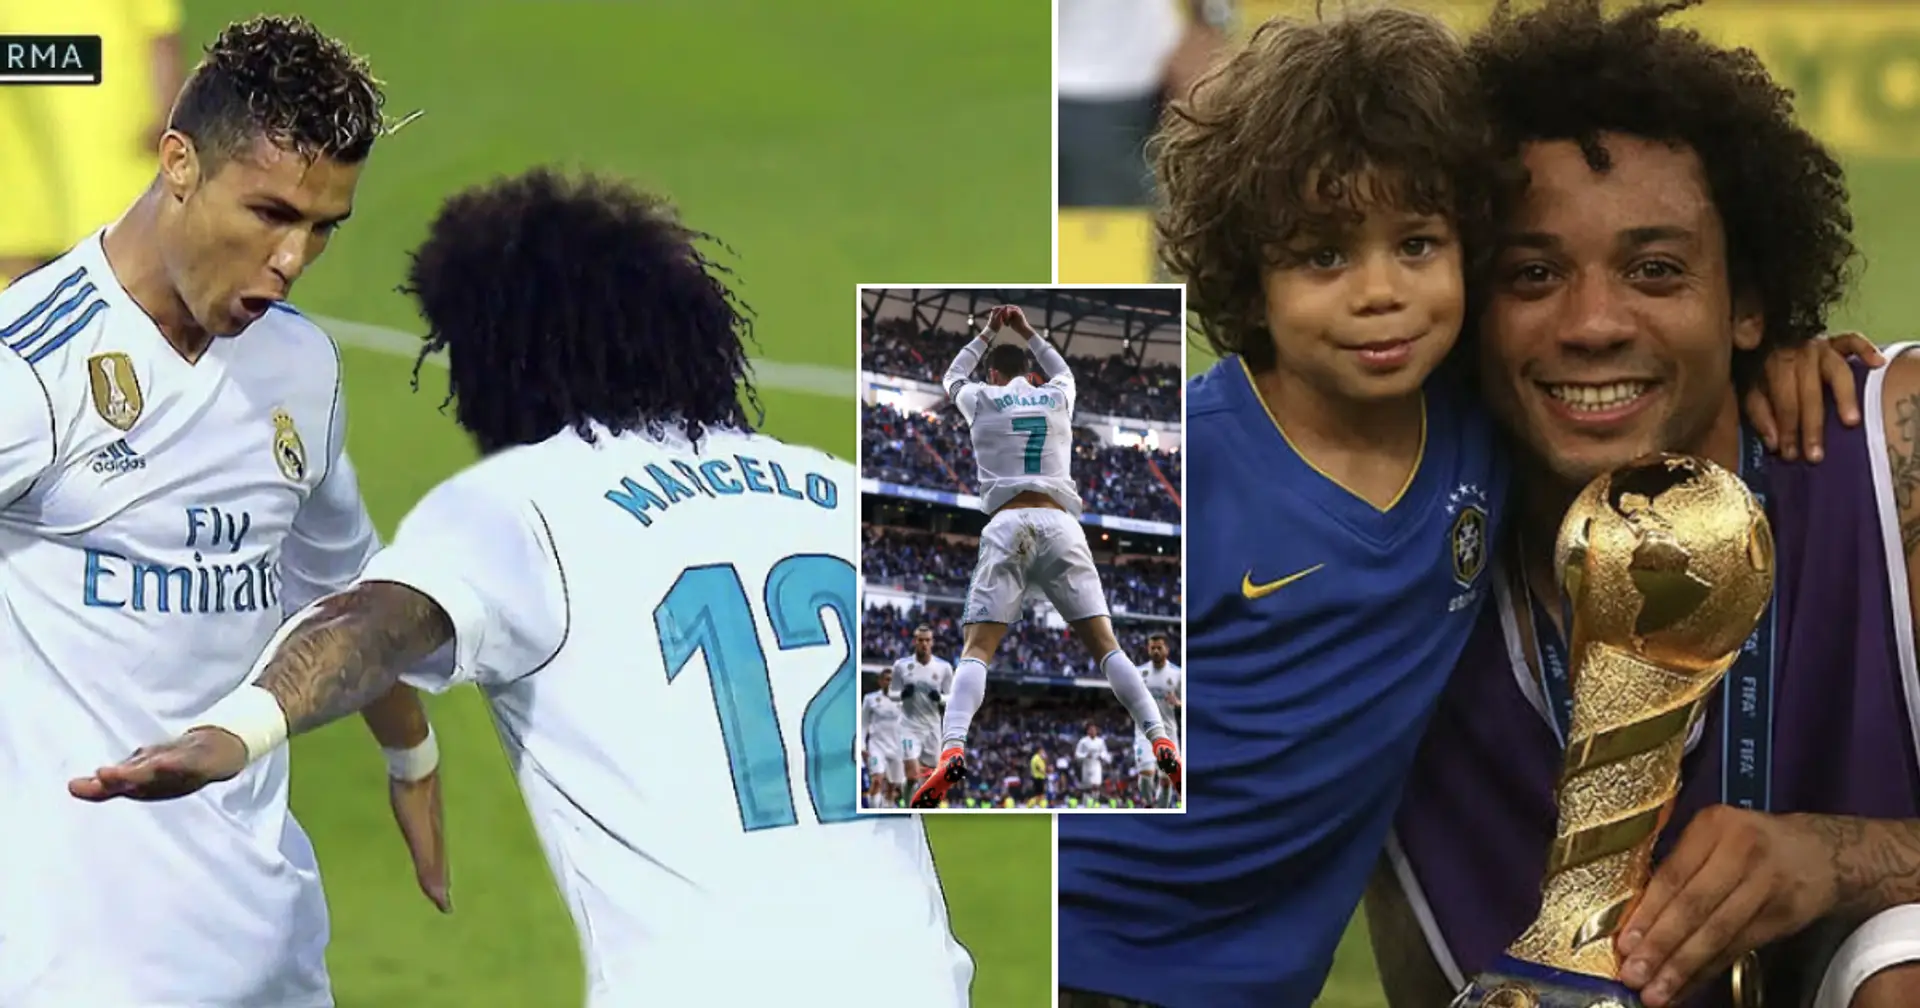 Caught on camera: Marcelo's son Enzo hits Ronaldo's iconic SIIIU celebration at his graduation ceremony